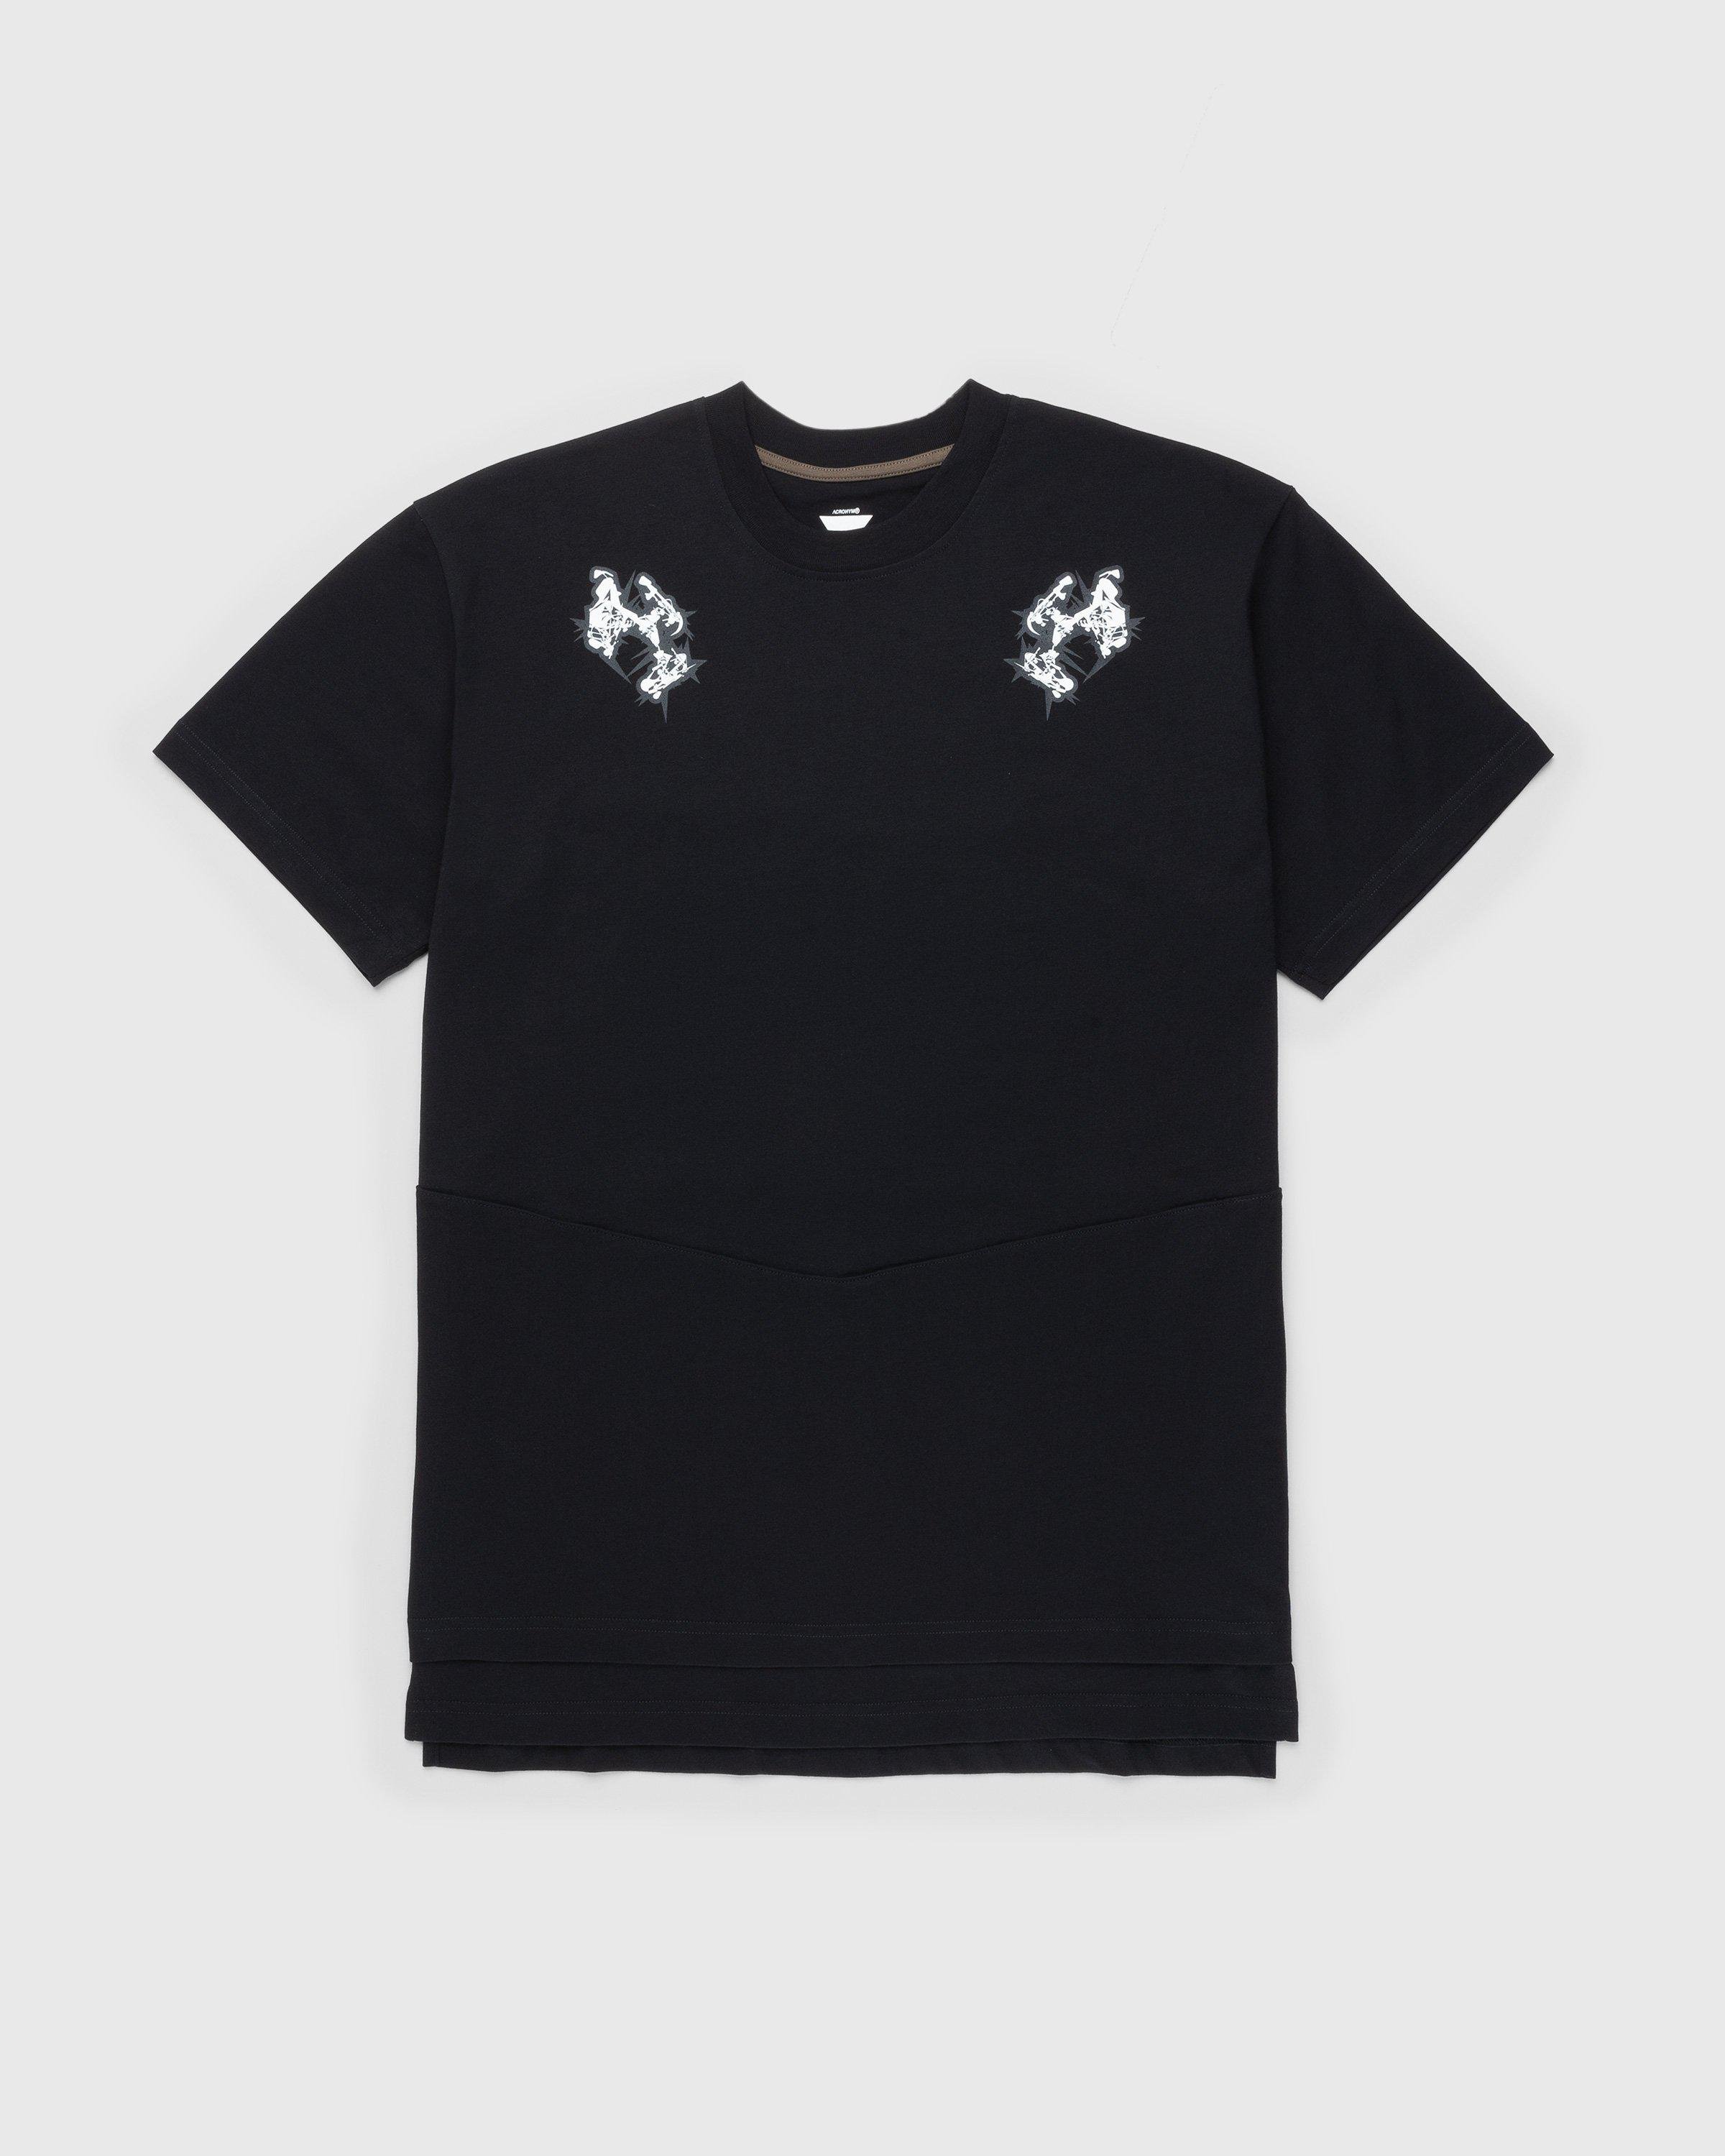 S28-PR-B Organic Cotton T-Shirt Black by ACRONYM